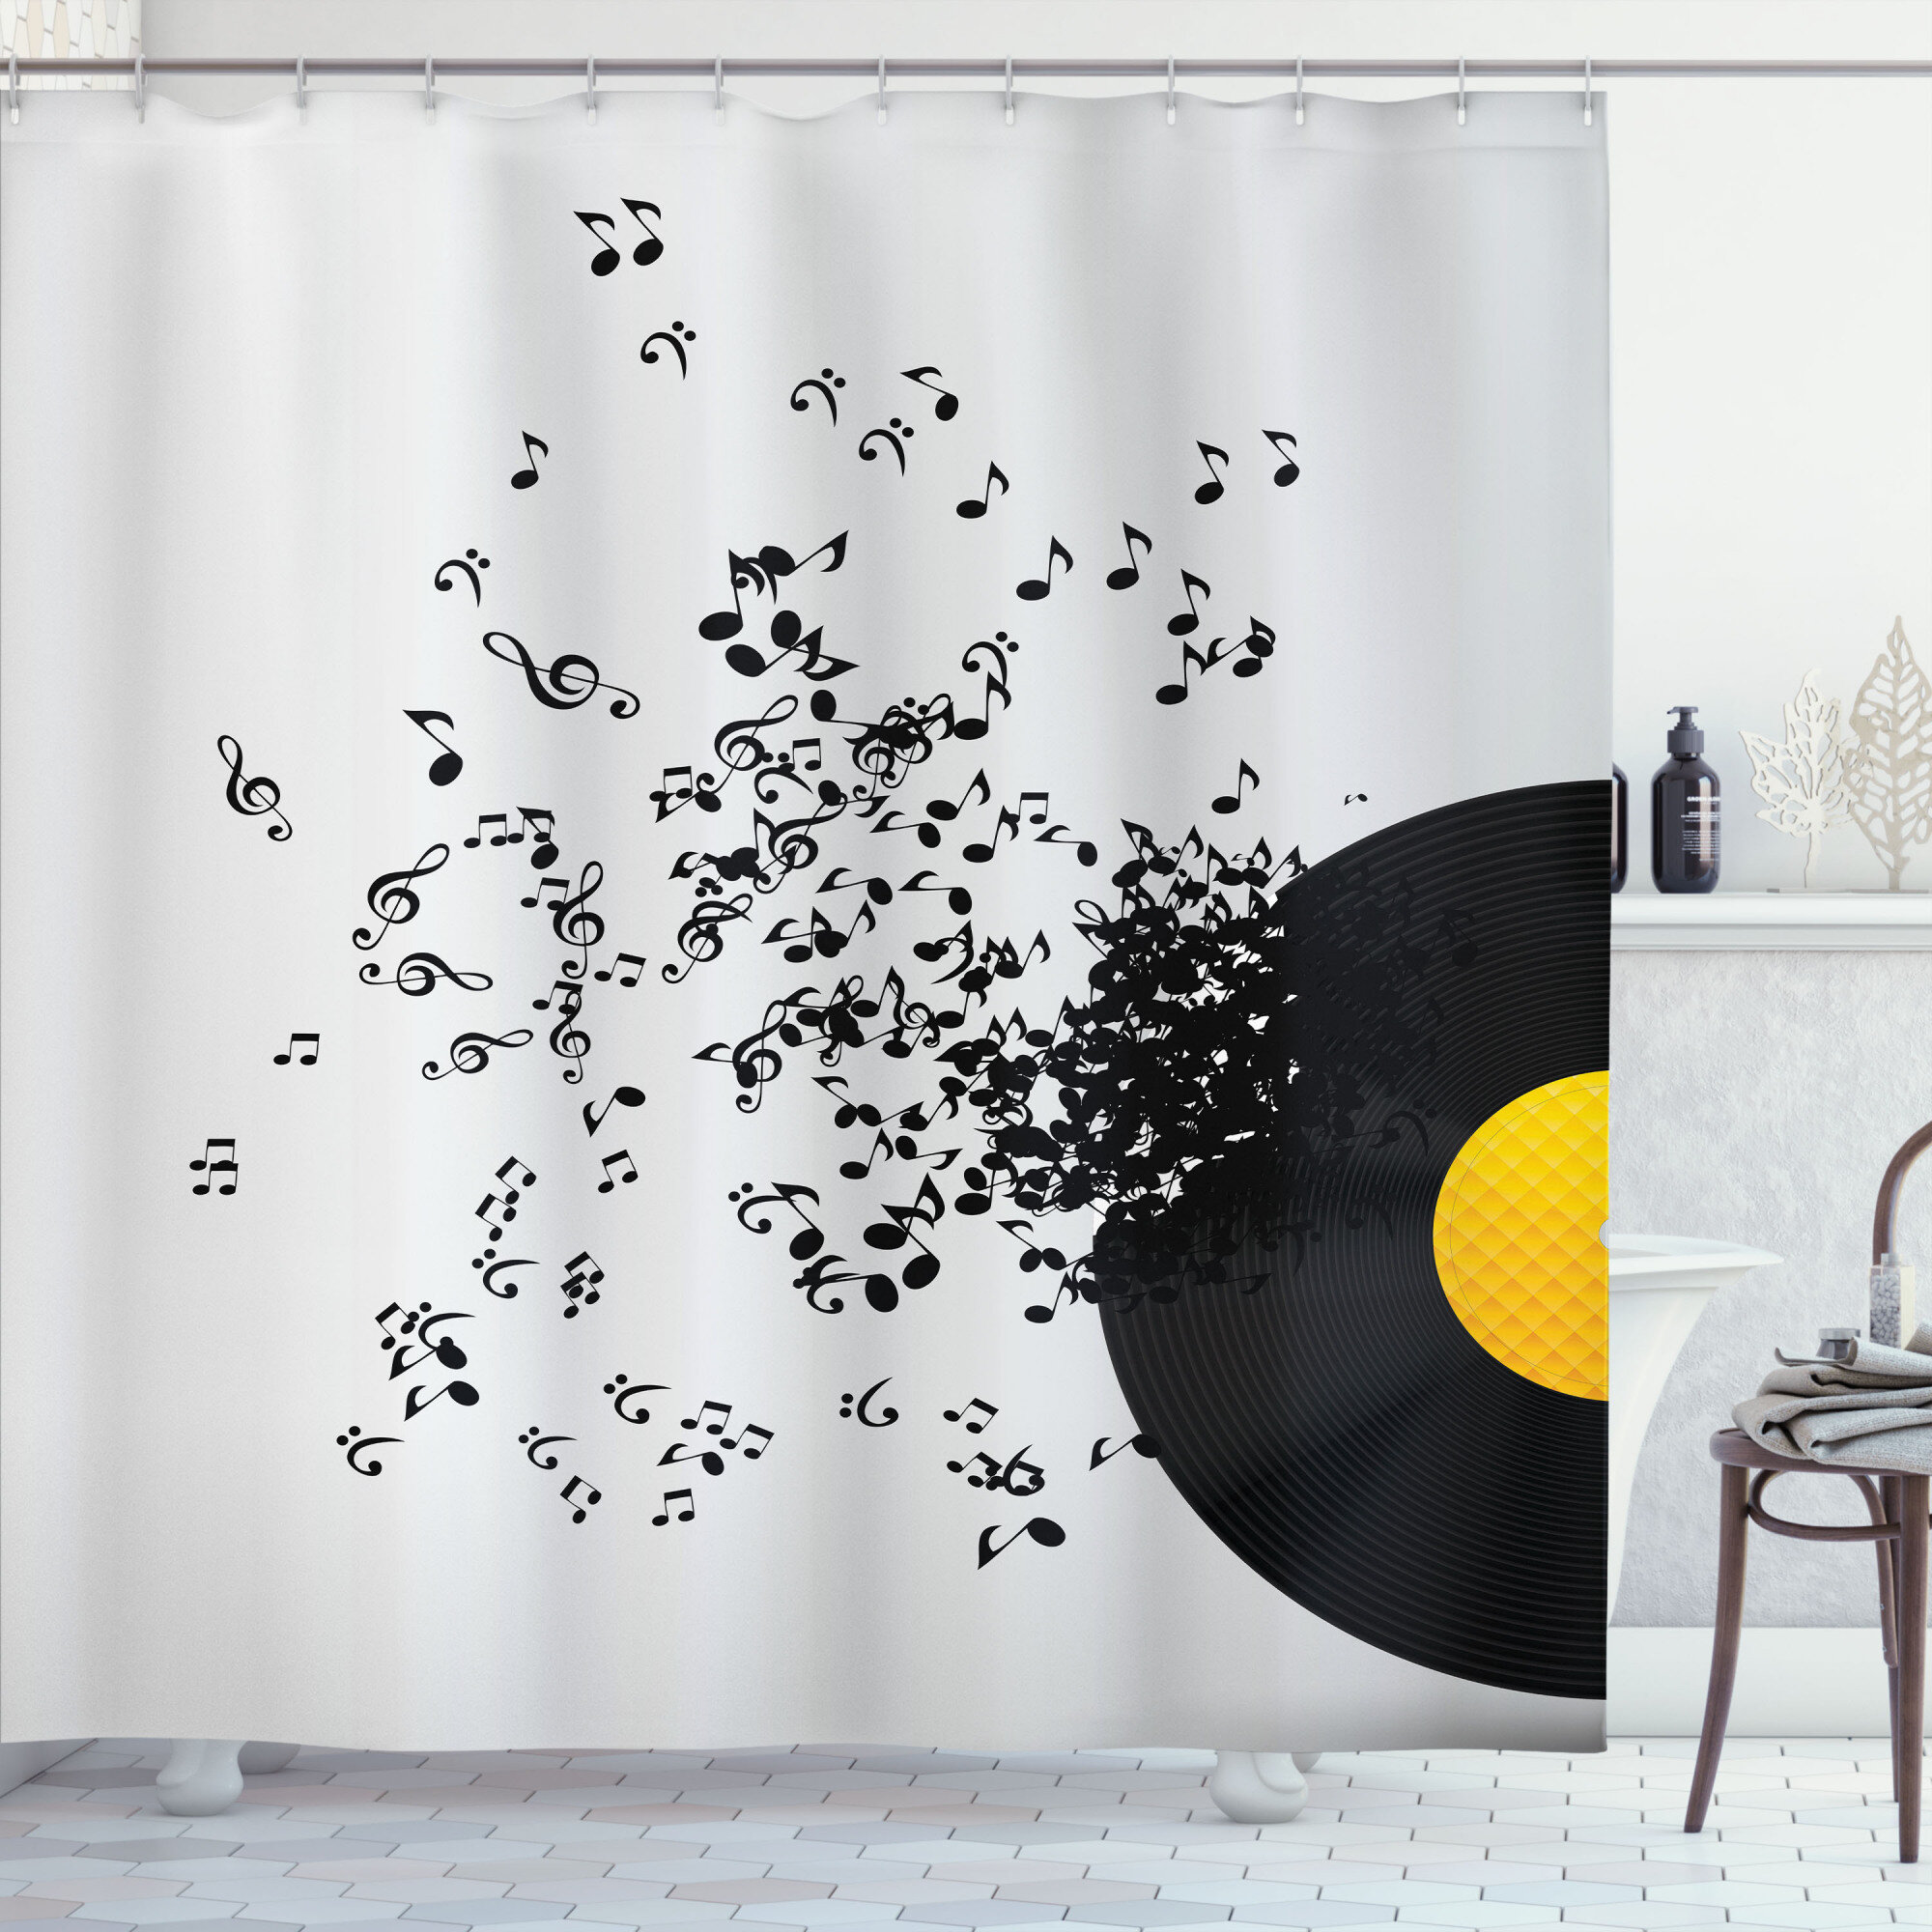 Lone Star Shower Curtain Set Bathroom Waterproof Fabric Curtain Liner & 12 Hooks 